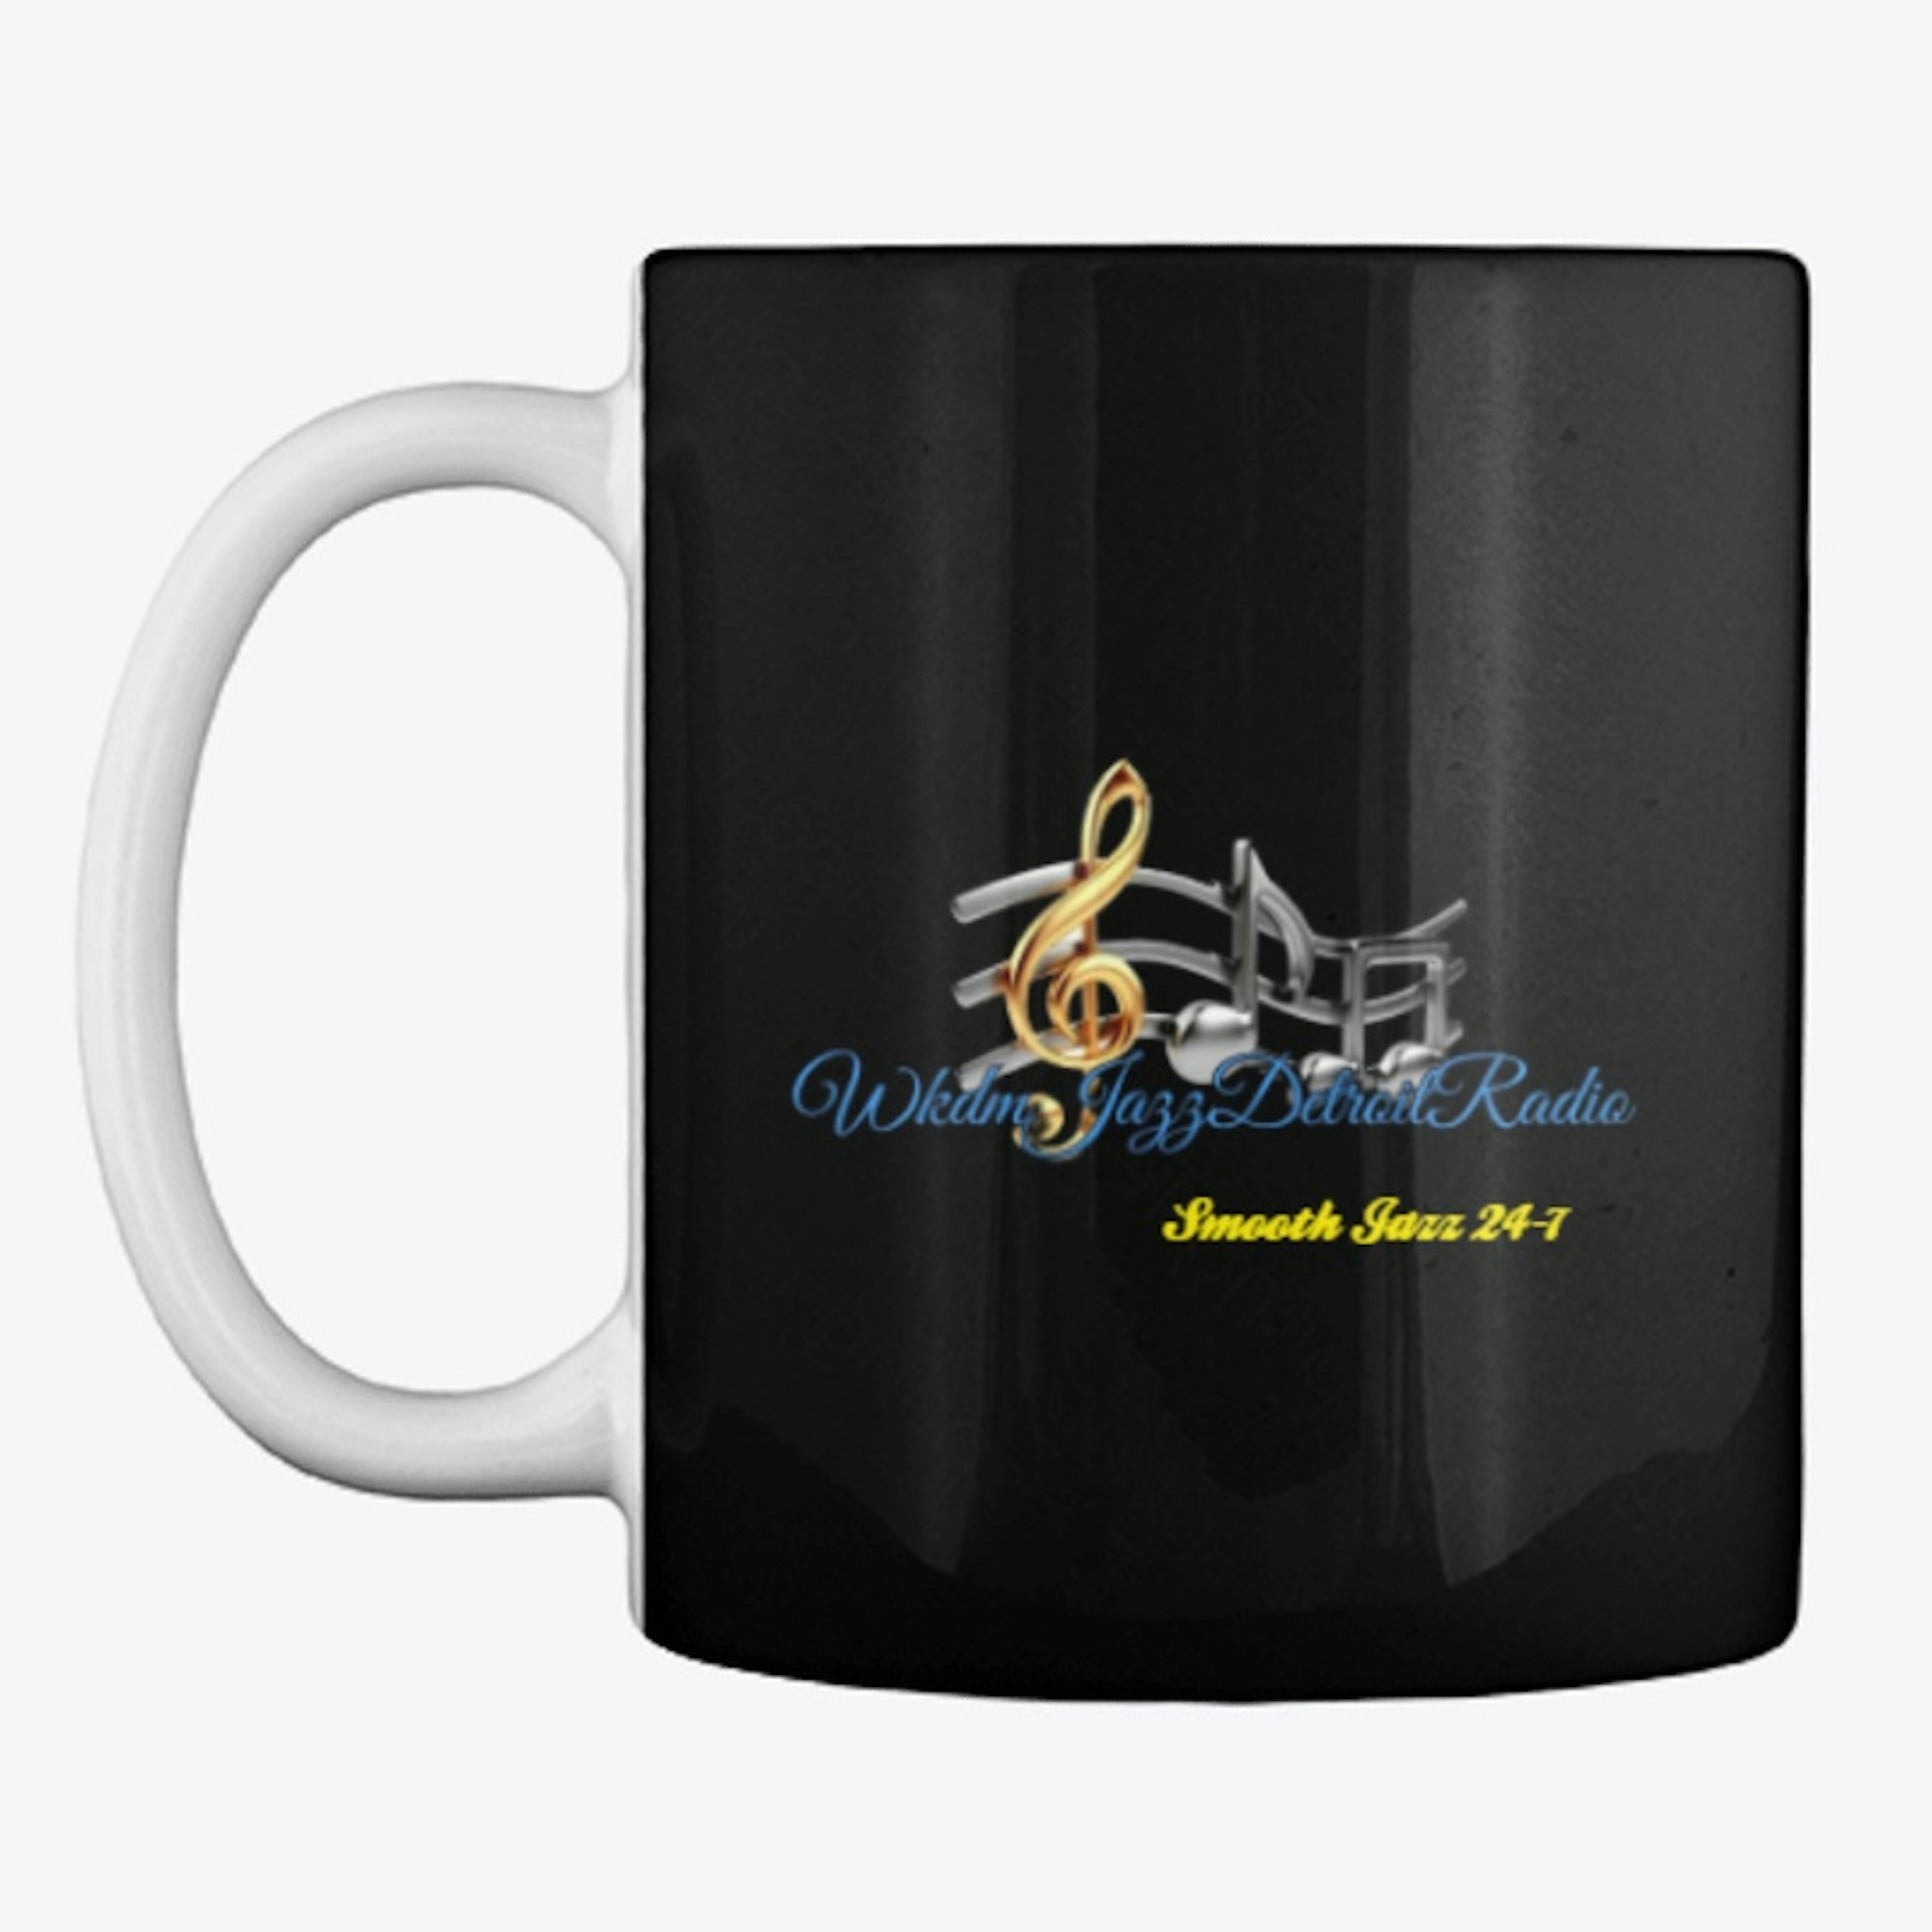 WKDMJAZZDETROITRADIO  Coffee Mug